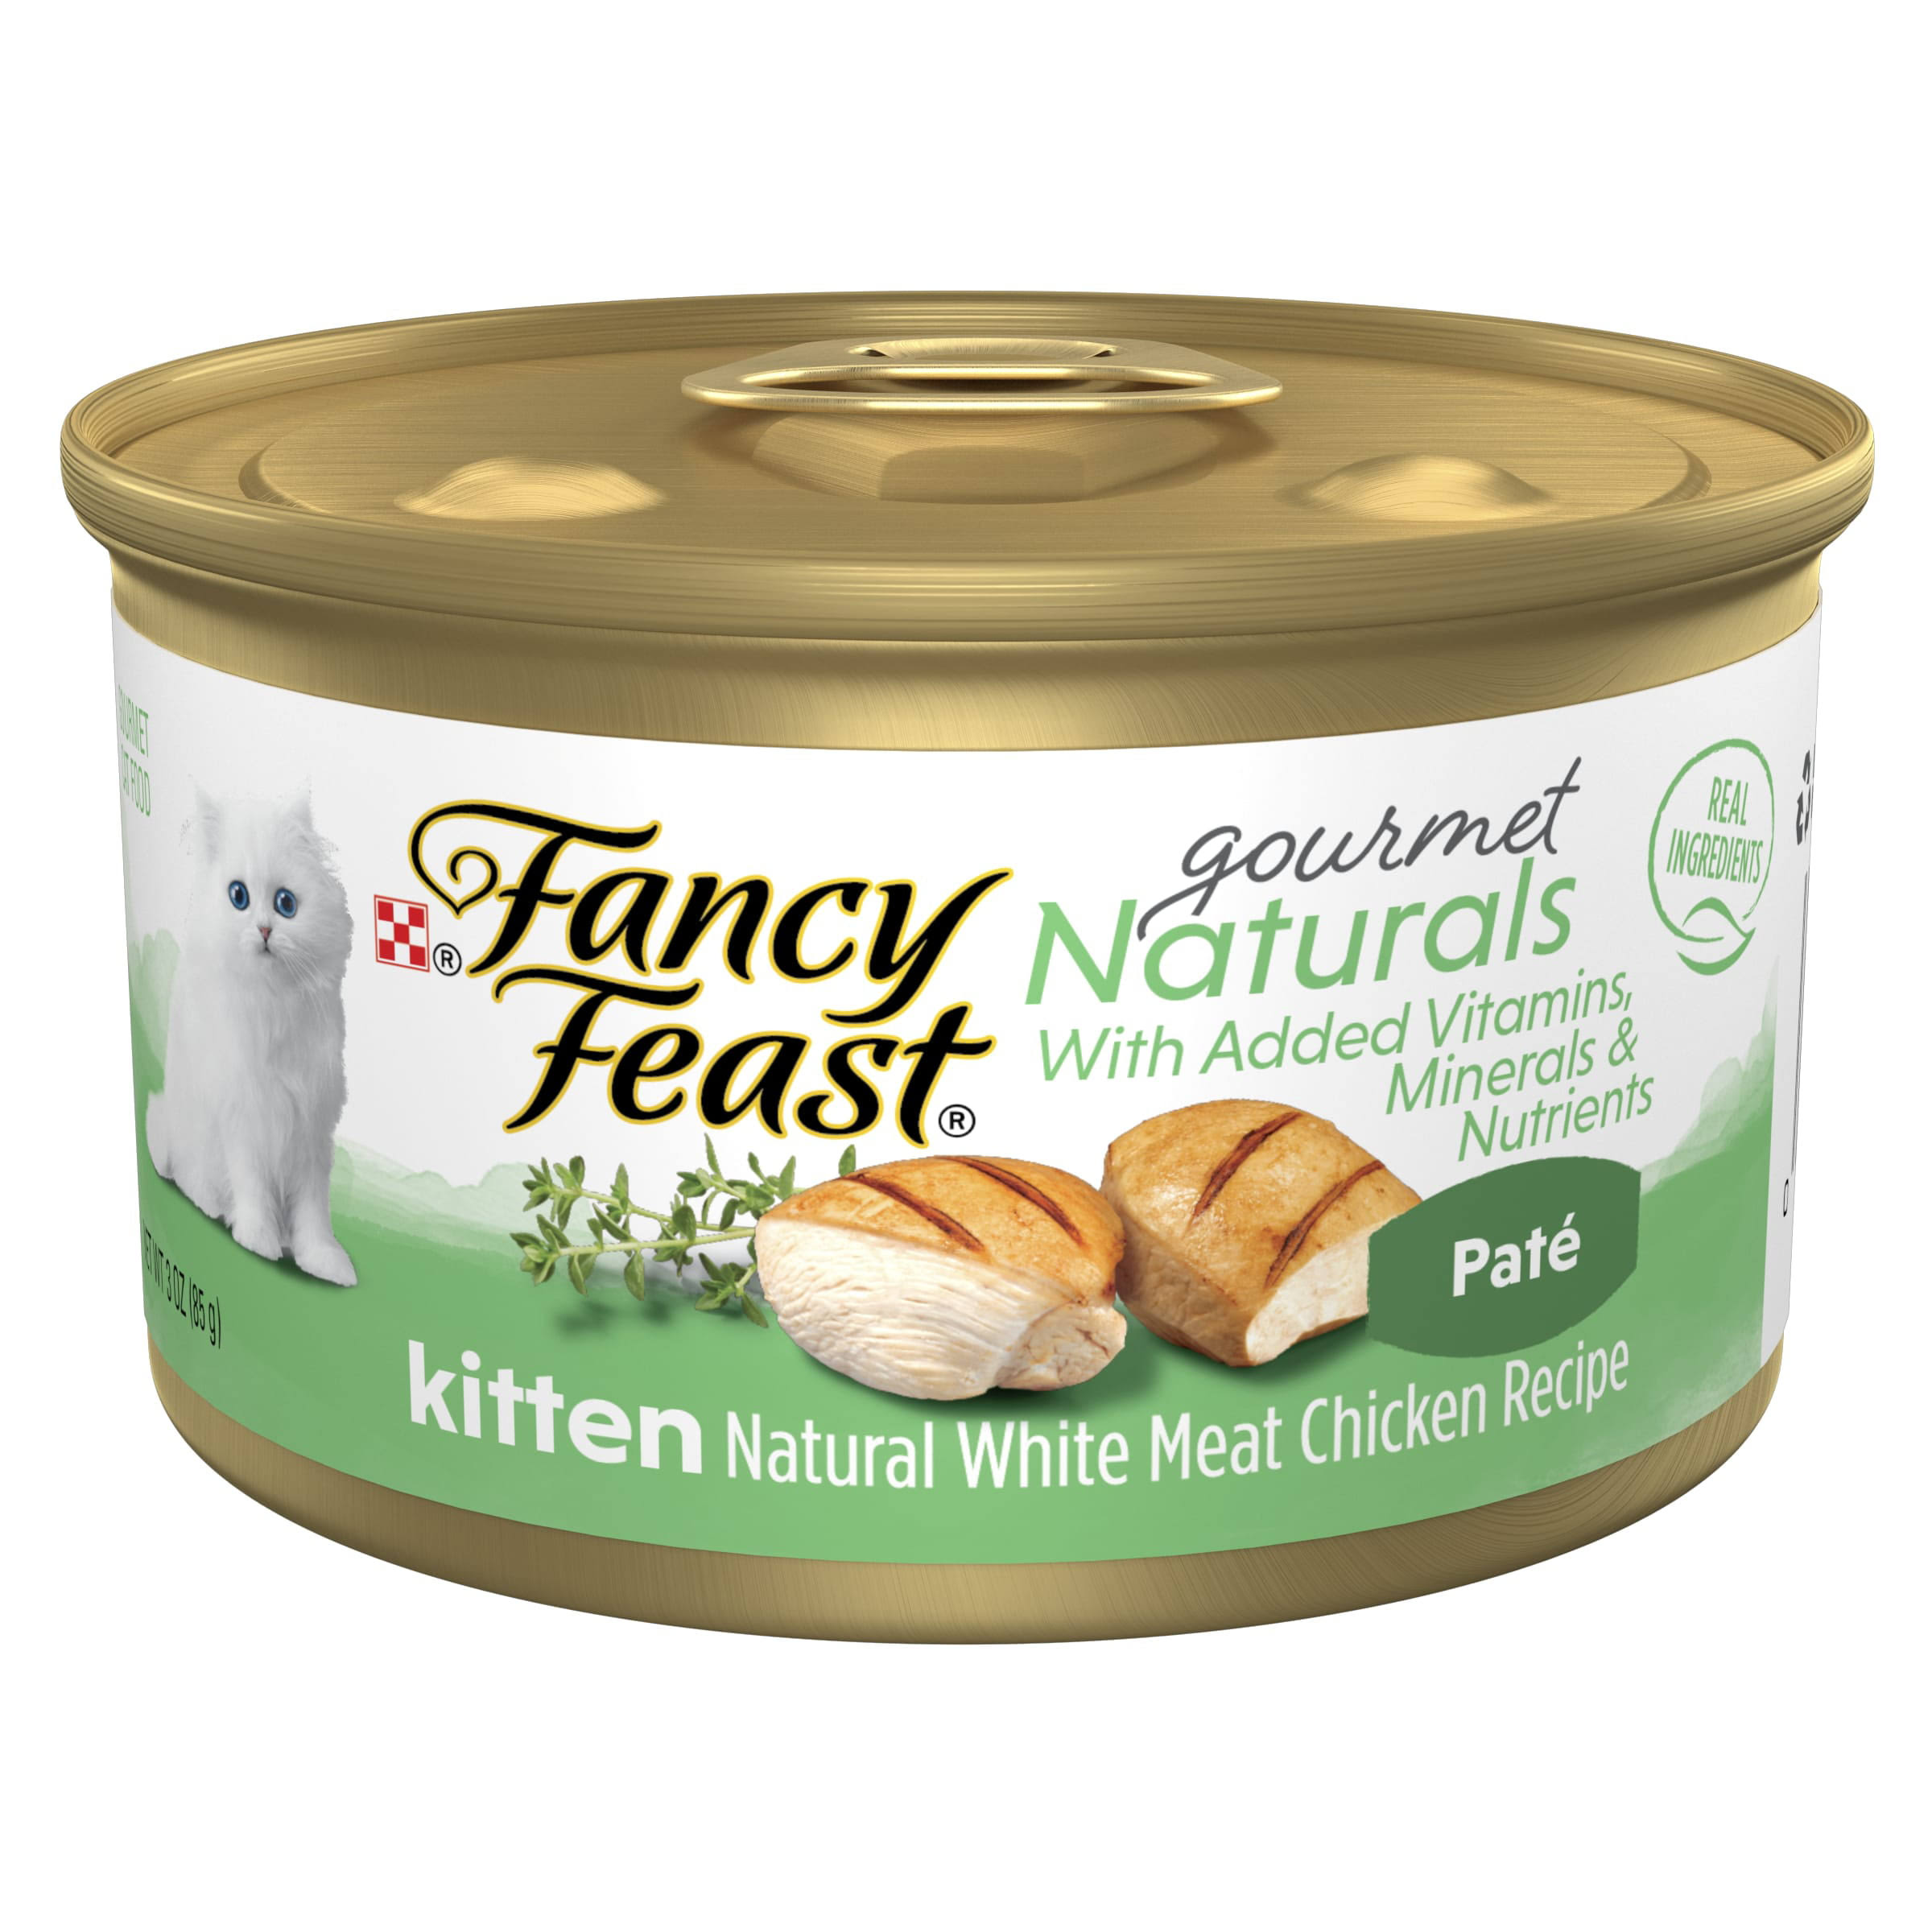 Fancy Feast Gourmet Naturals Cat Food, Natural White Meat Chicken Recipe, Kitten - 3 oz